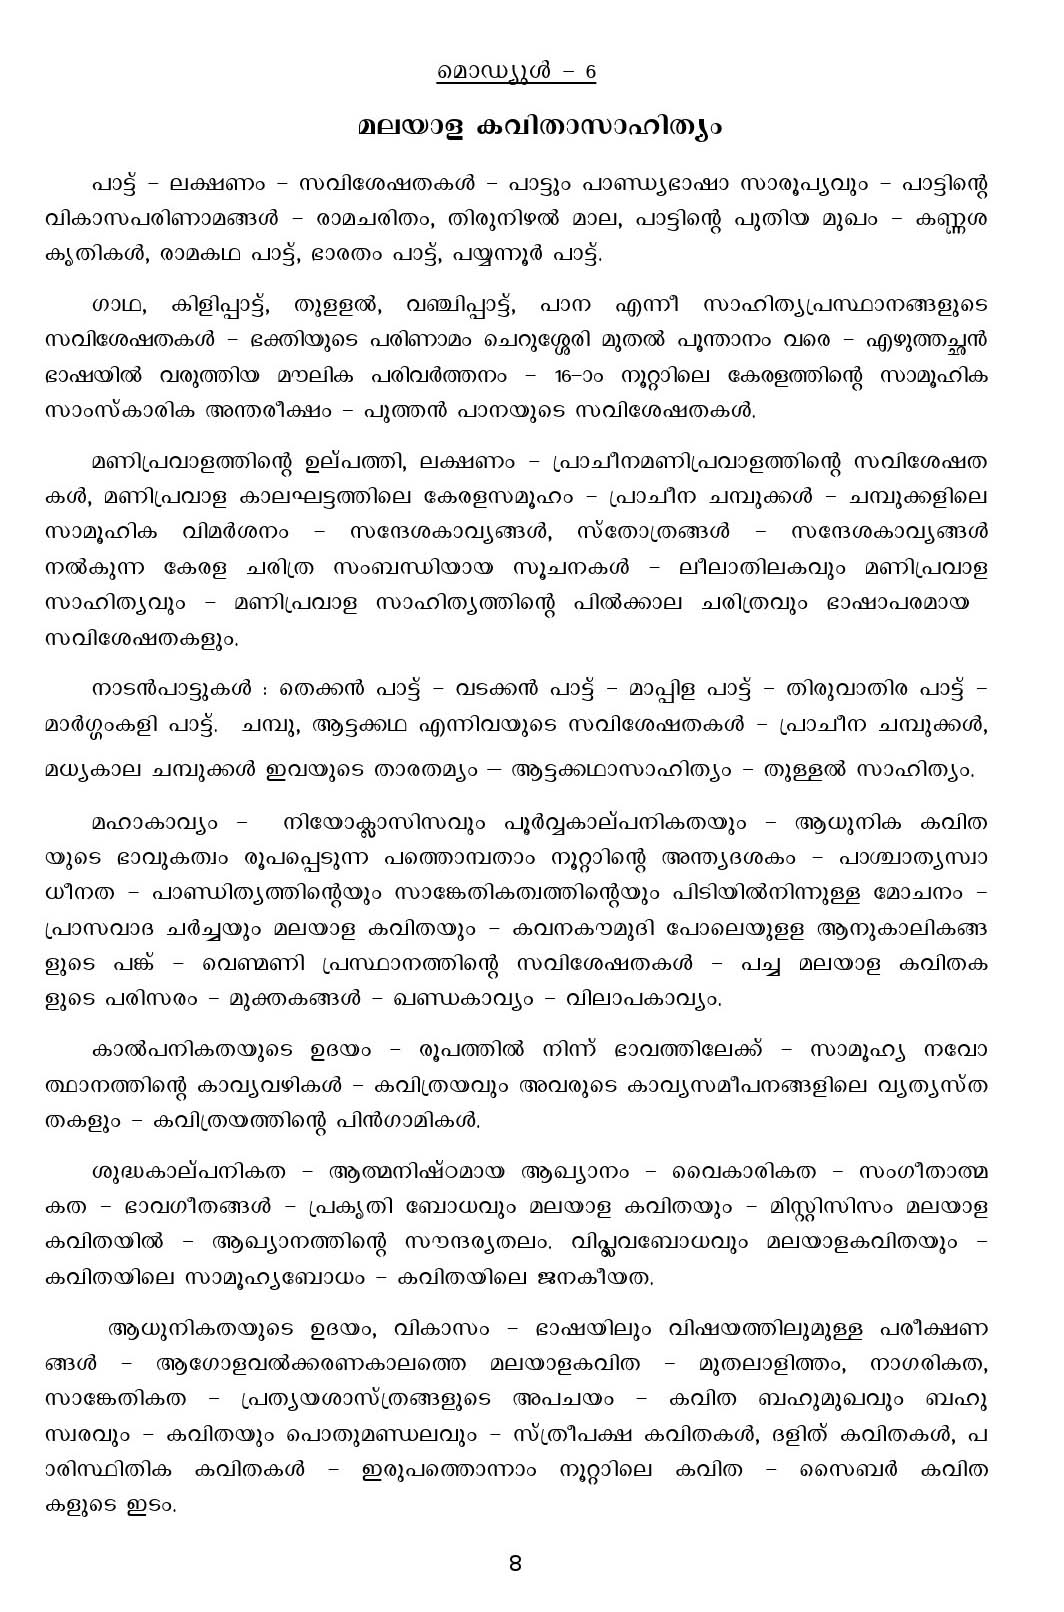 Kerala PSC Assistant Professor Malayalam Exam Syllabus - Notification Image 8